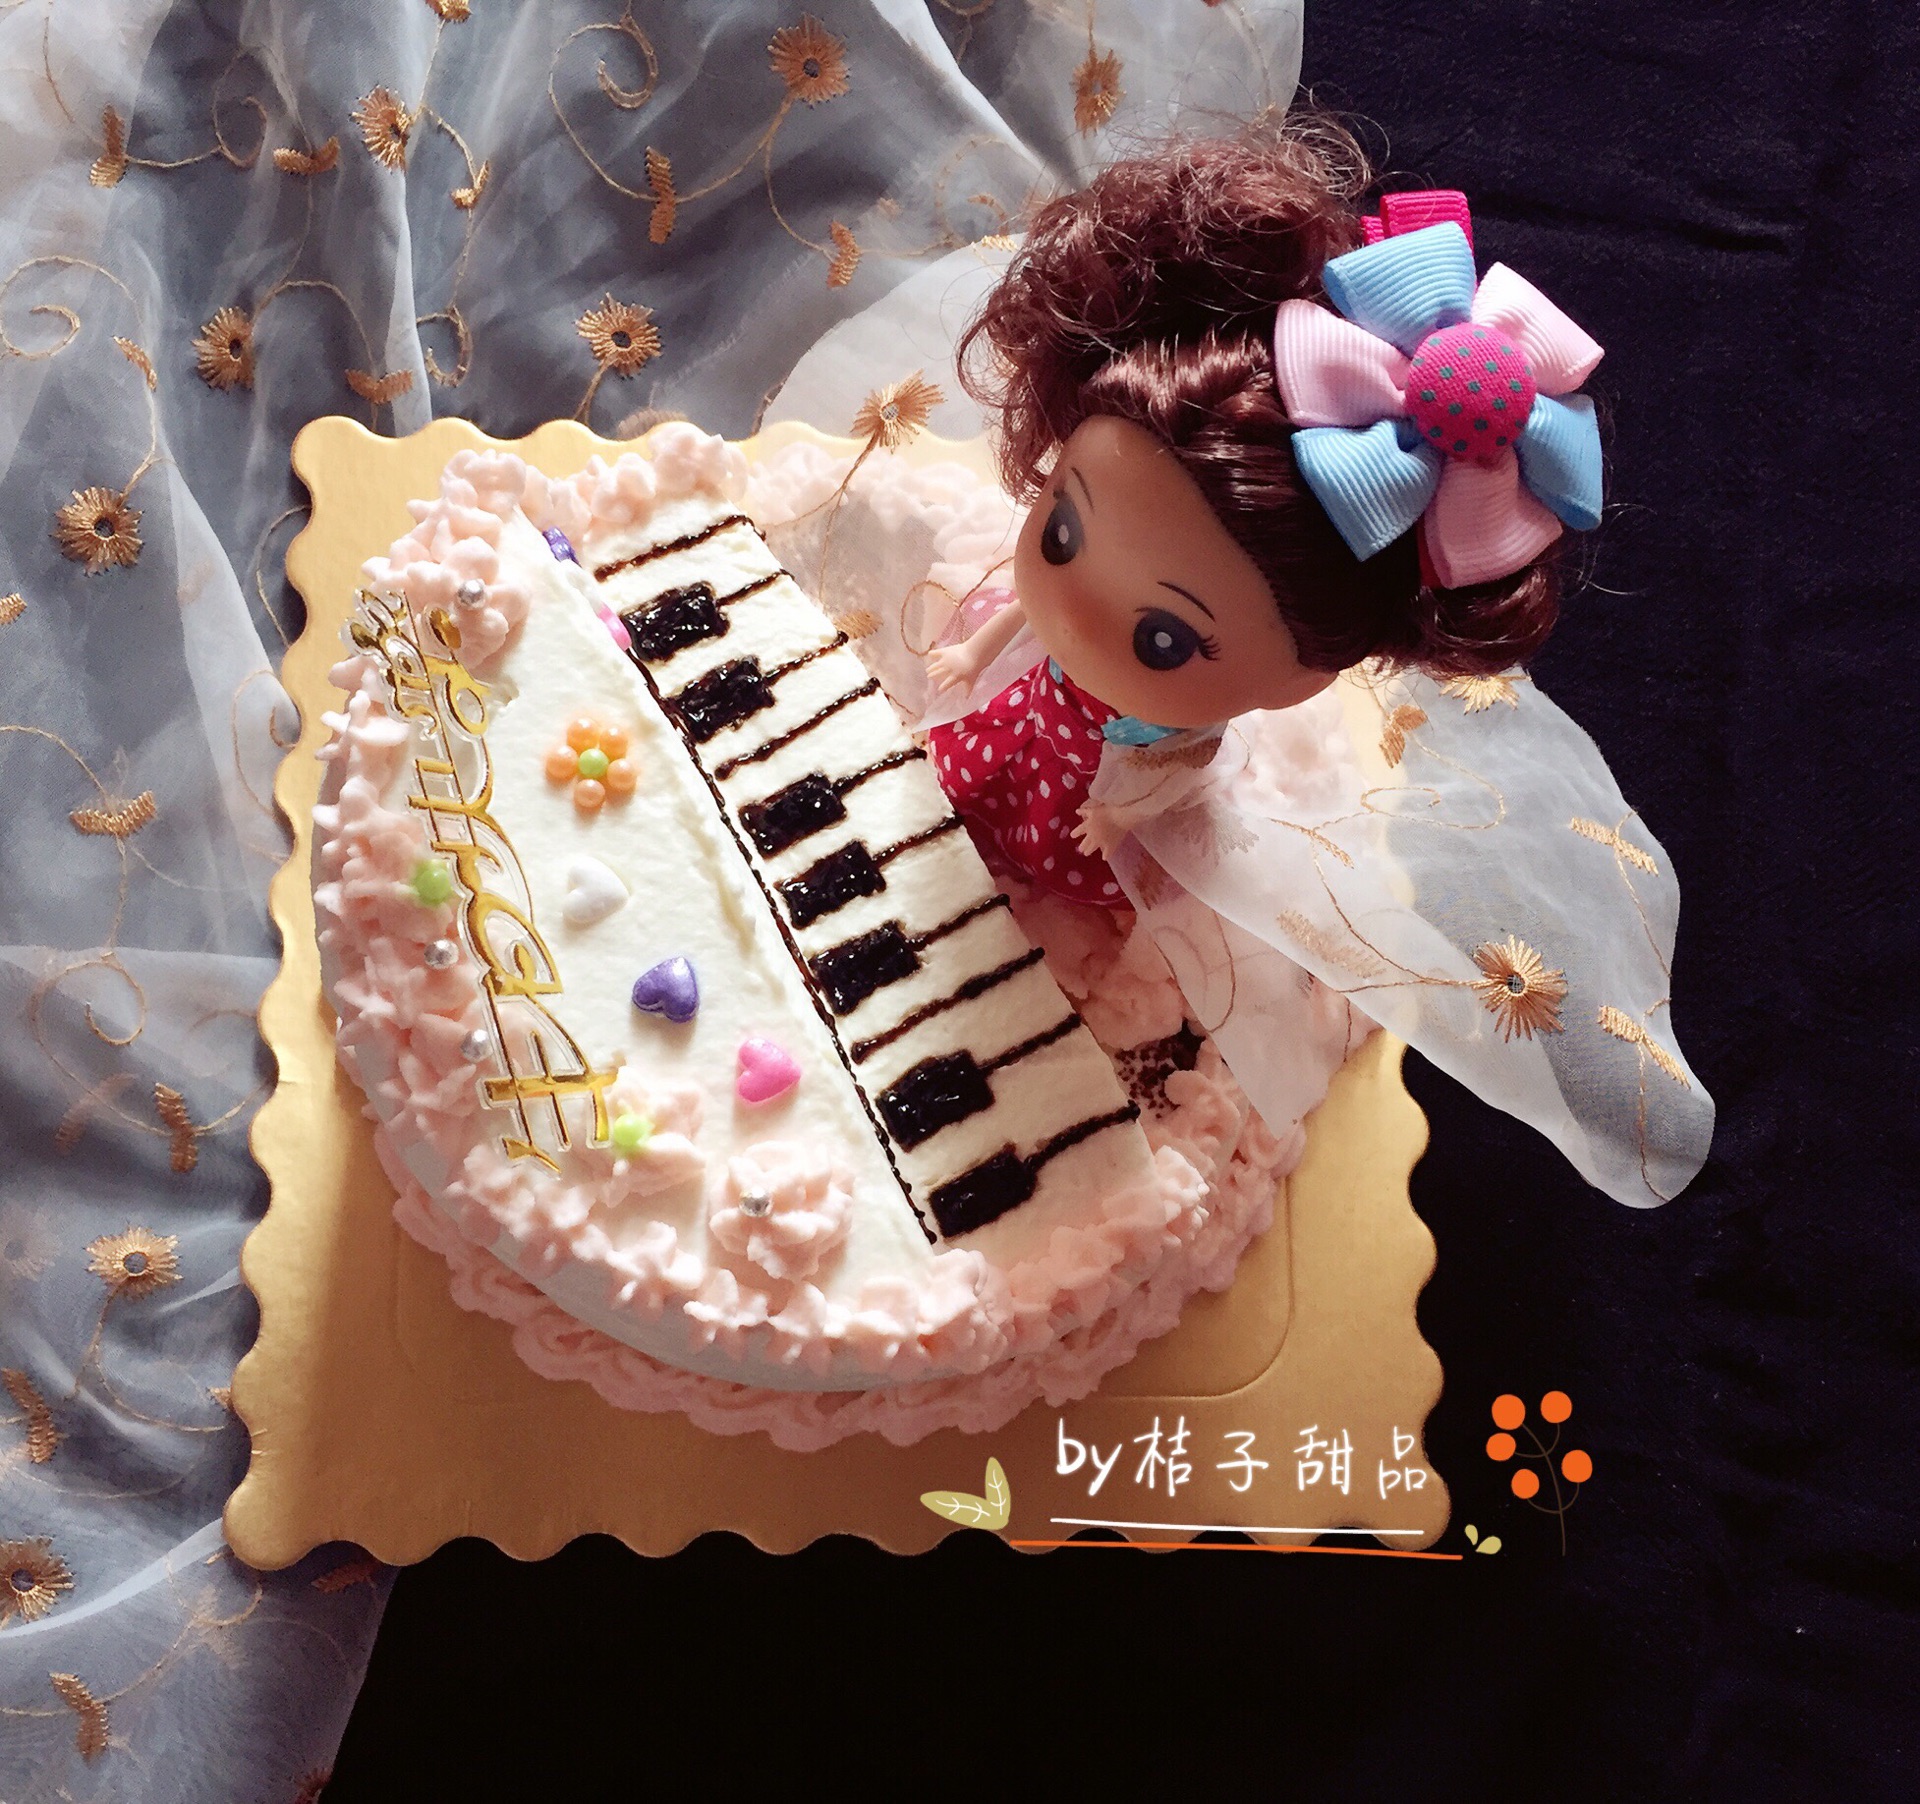 Violette's Patisserie: Piano Cake 鋼琴蛋糕